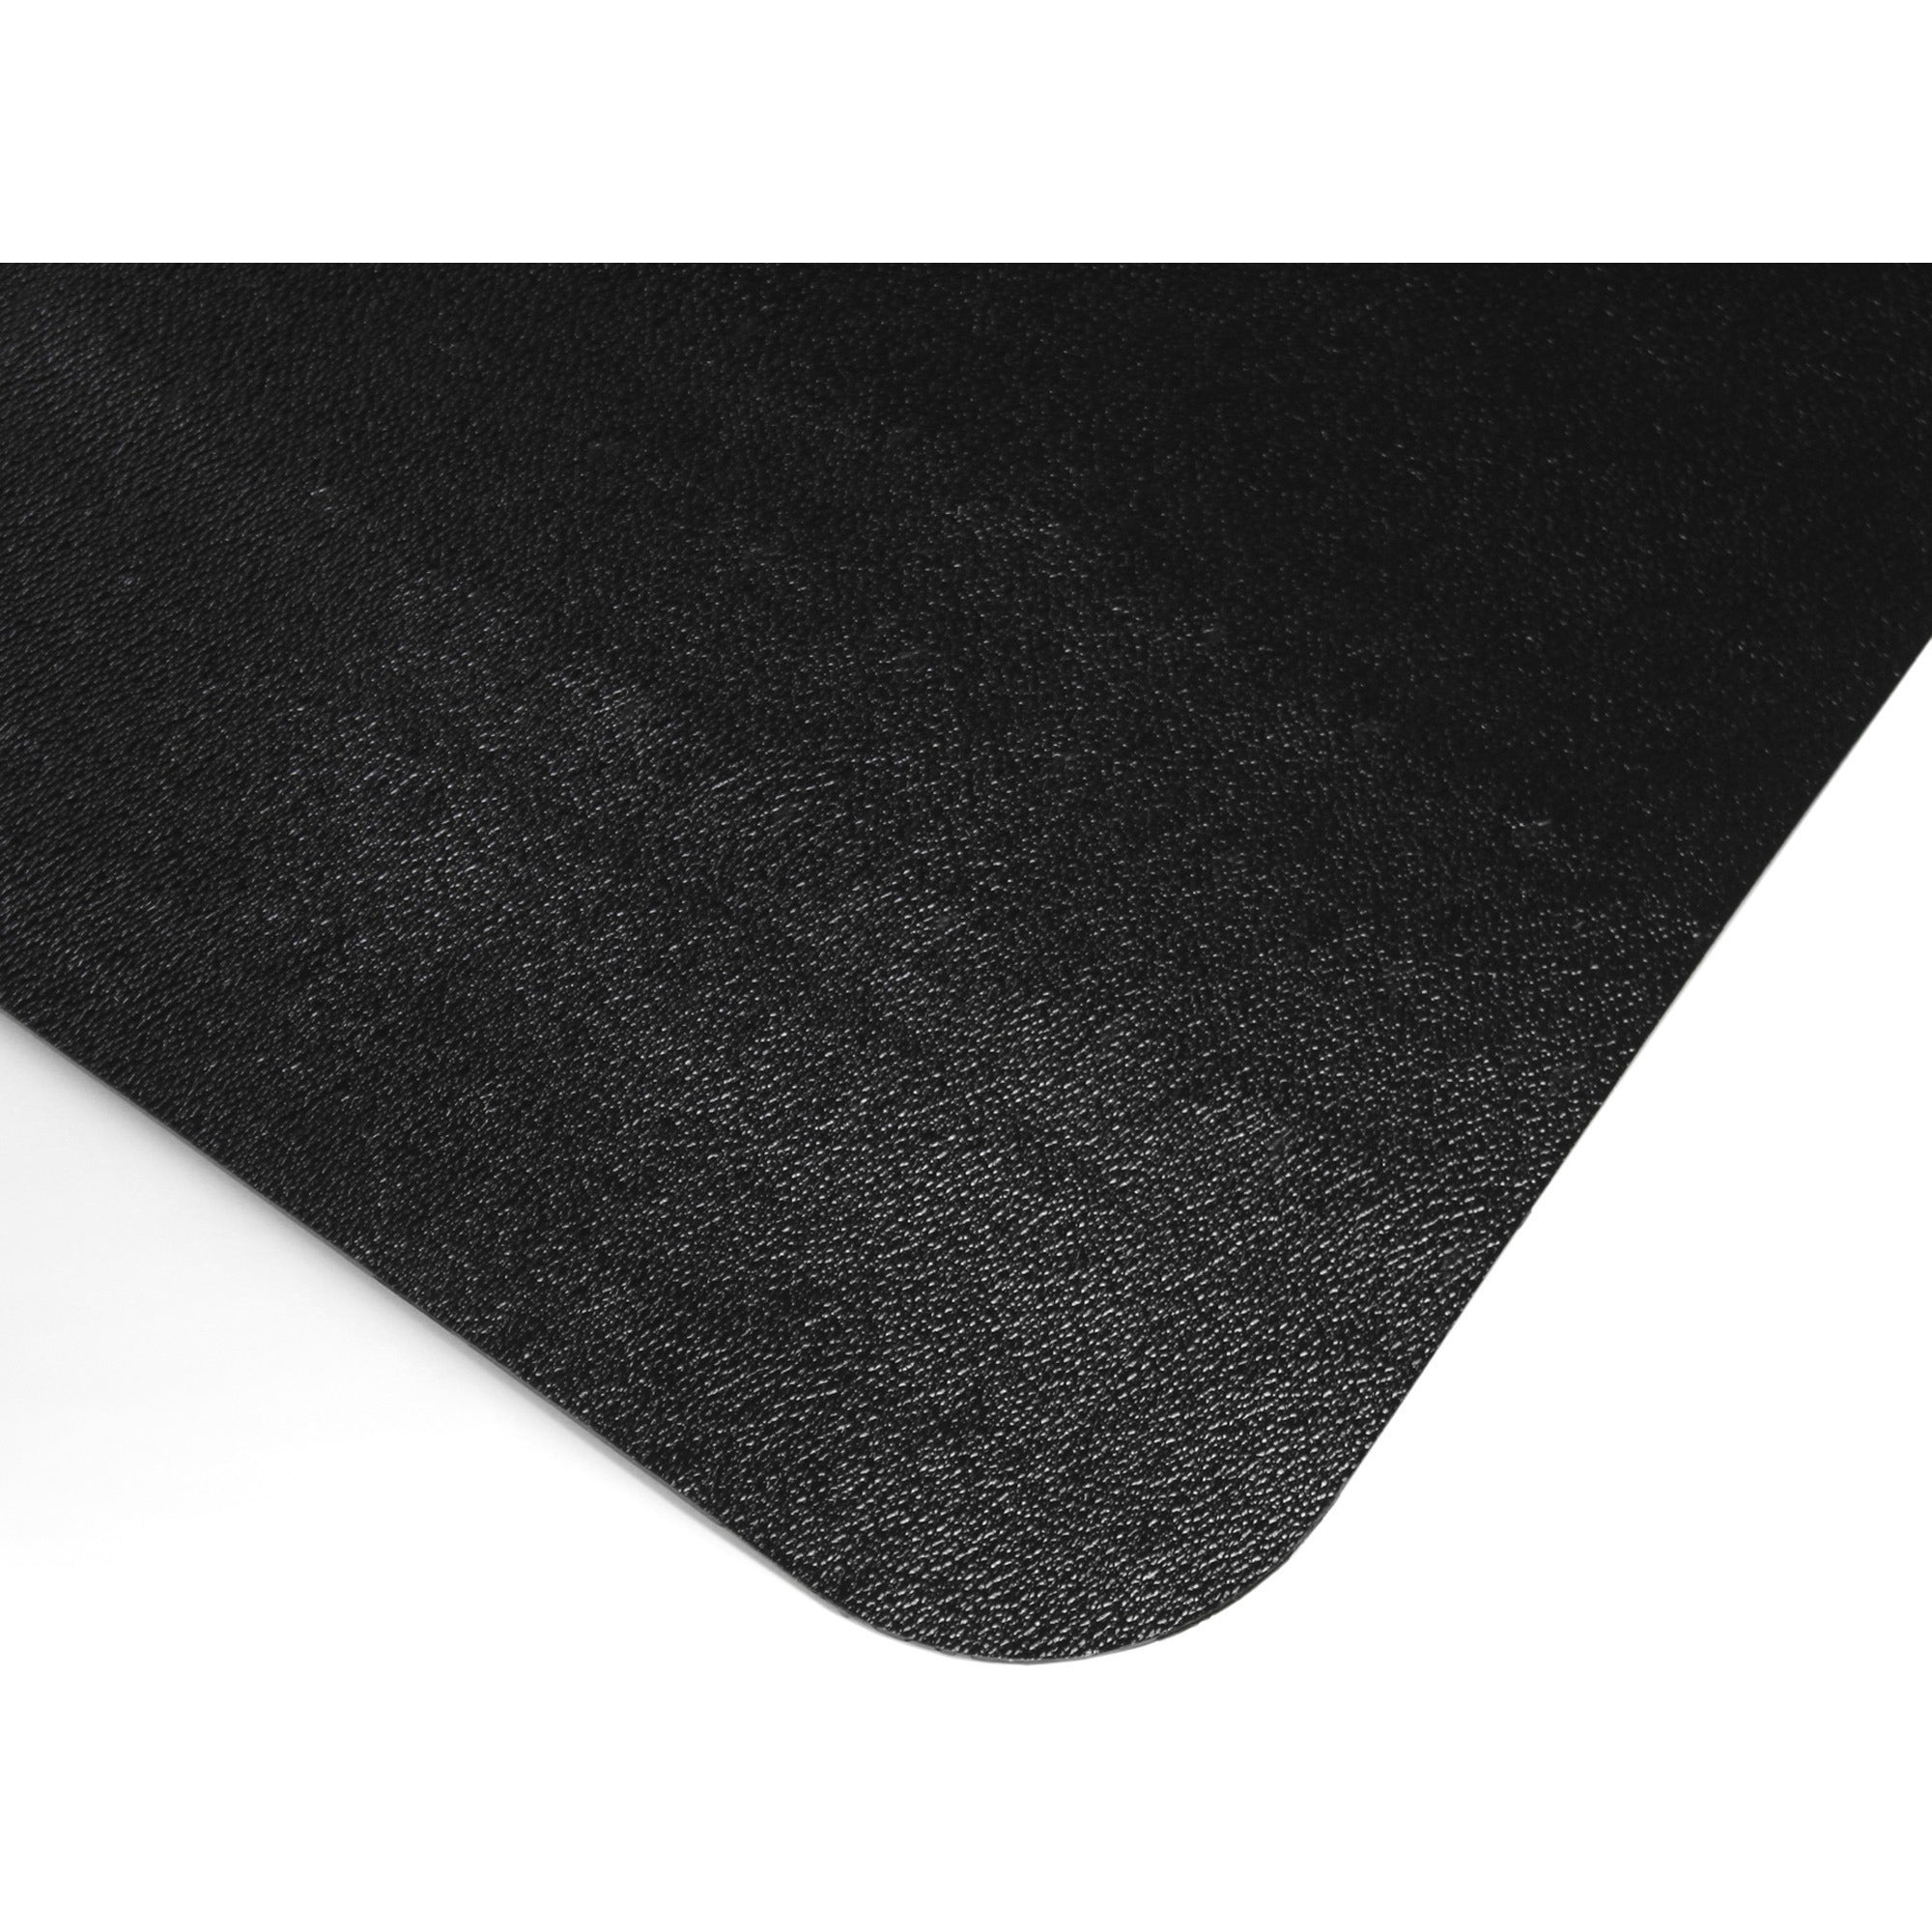 advantagemat-black-vinyl-lipped-chair-mat-for-hard-floor-45-x-53-hard-floor-53-length-x-45-width-x-0080-depth-x-0080-thickness-lip-size-25-length-x-12-width-lipped-classic-polyvinyl-chloride-pvc-black-1each-taa-co_flrfc124553hlbv - 2